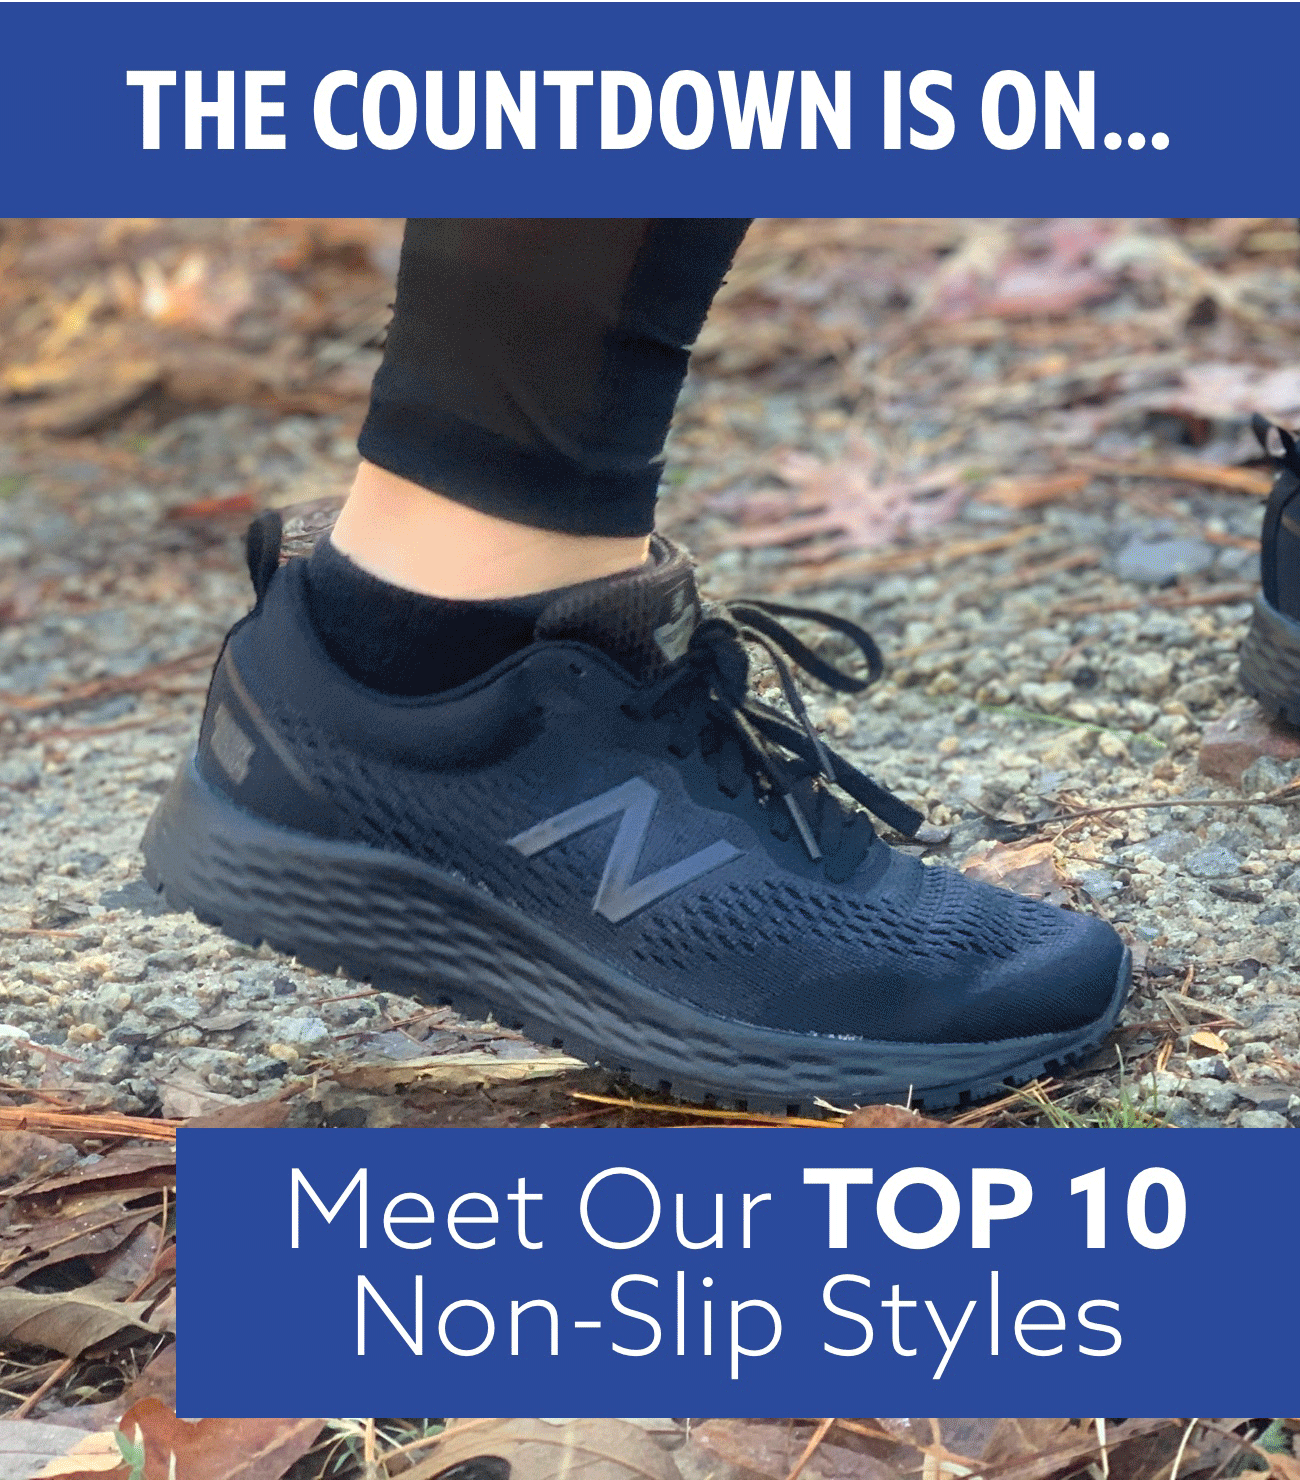 Meet our top 10 non-slip styles | Shop Now